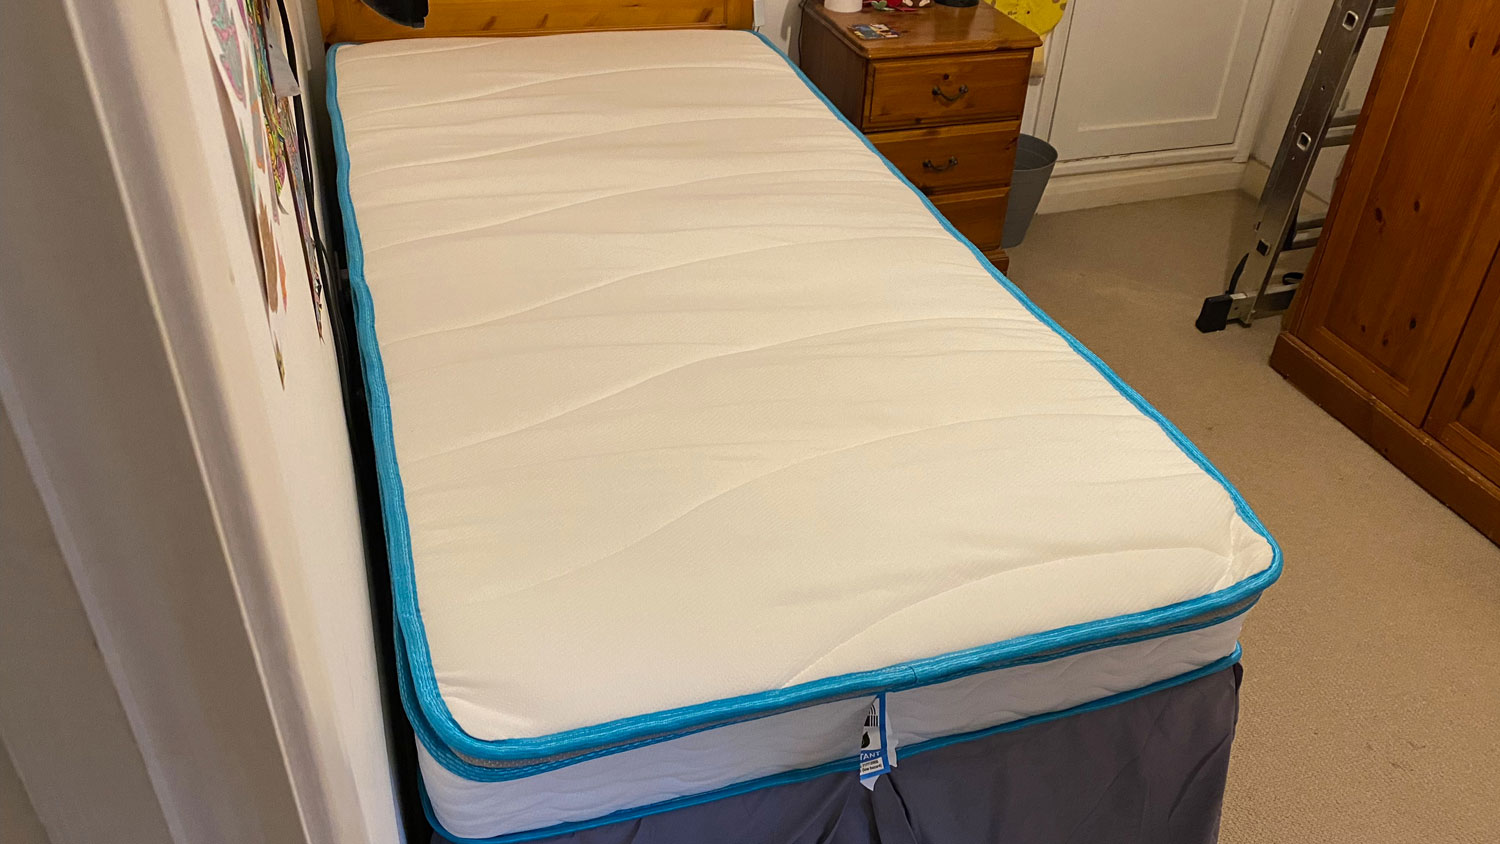 nenspa 8 spring & memory foam hybrid mattress